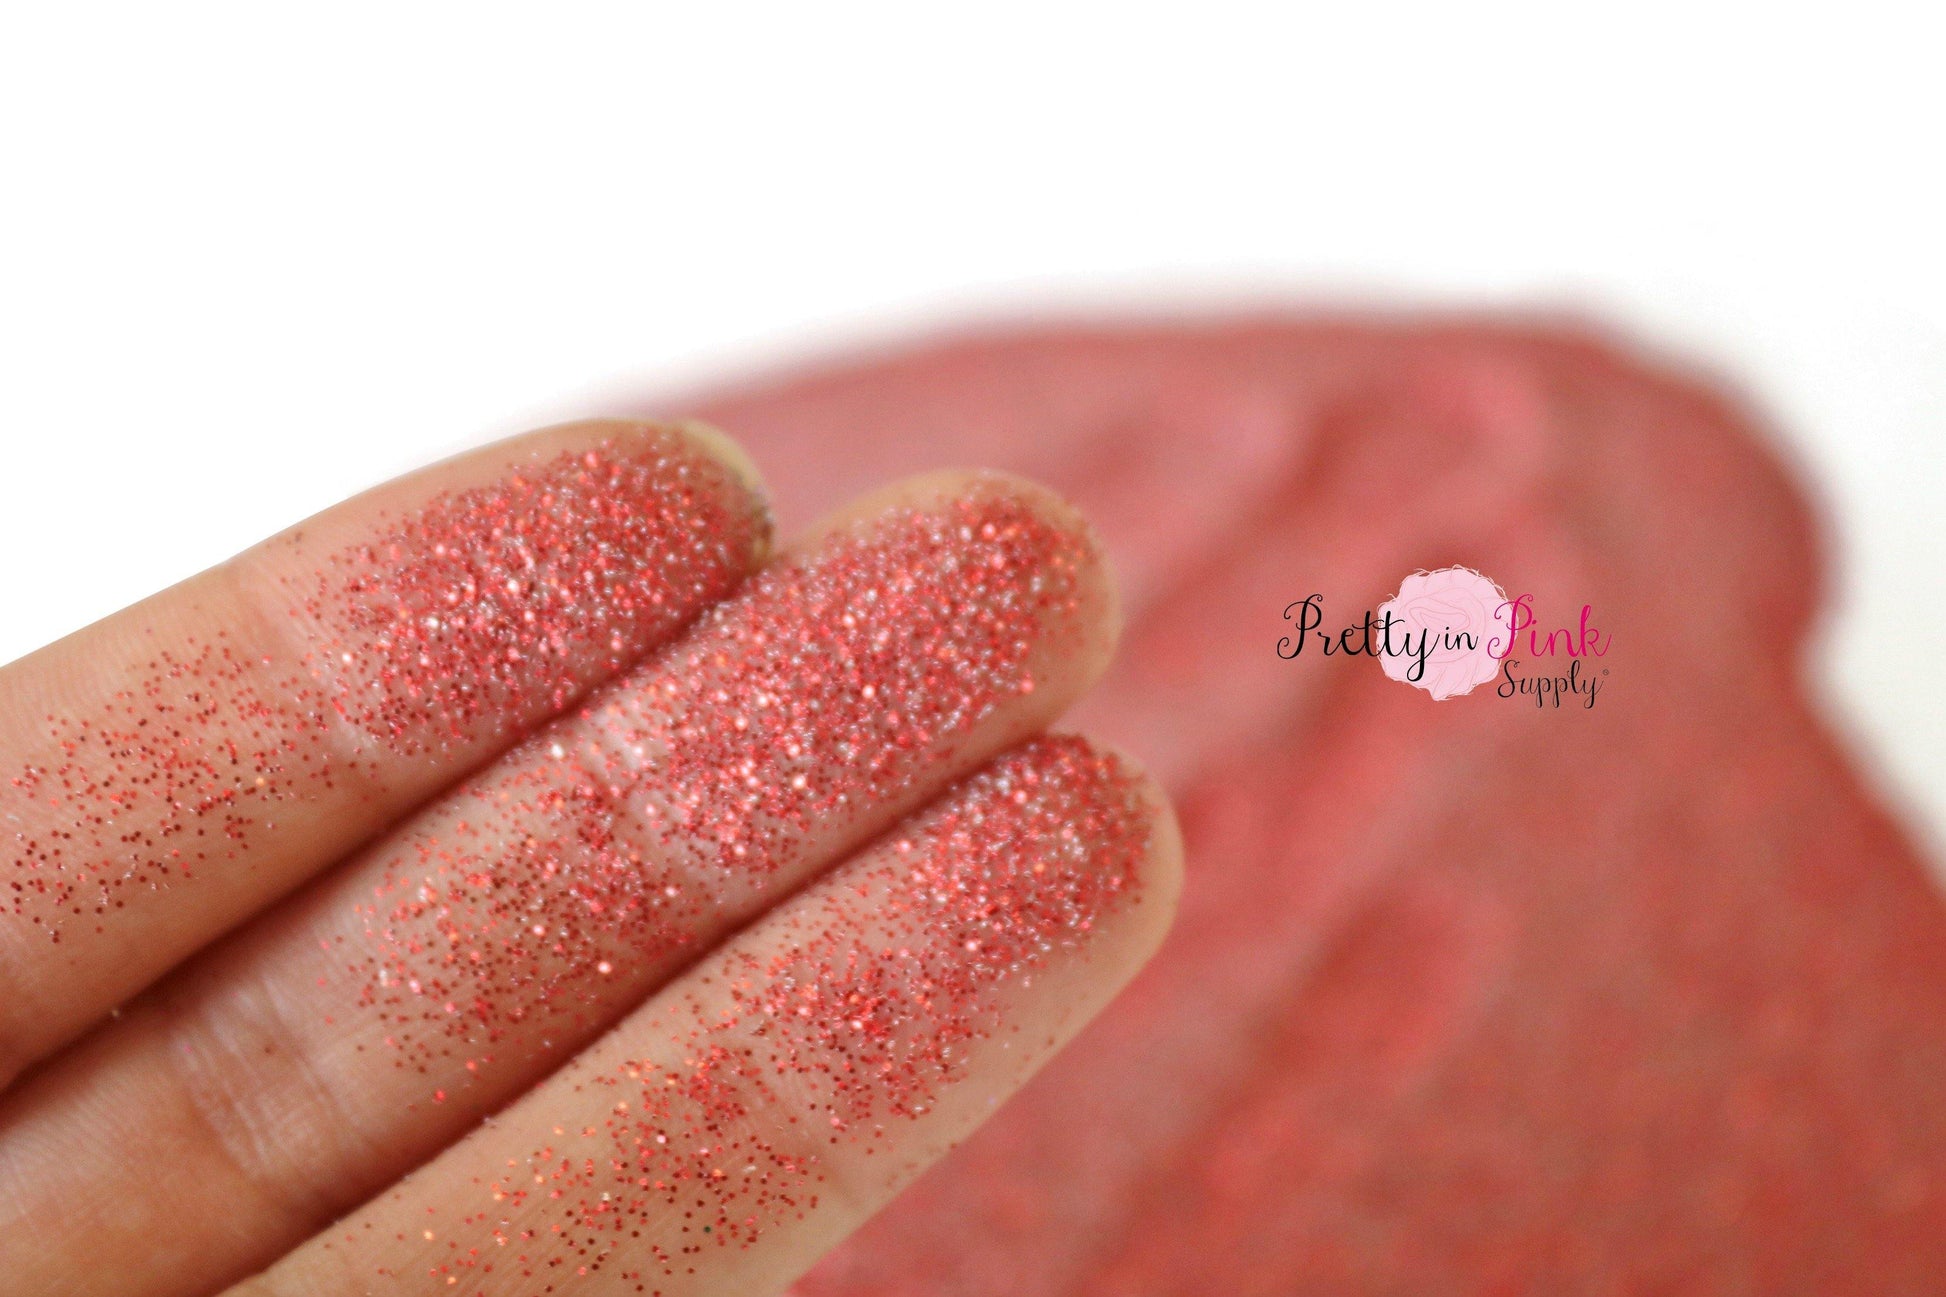 Red Silver Matte Ultra Fine Glitter - Pretty in Pink Supply